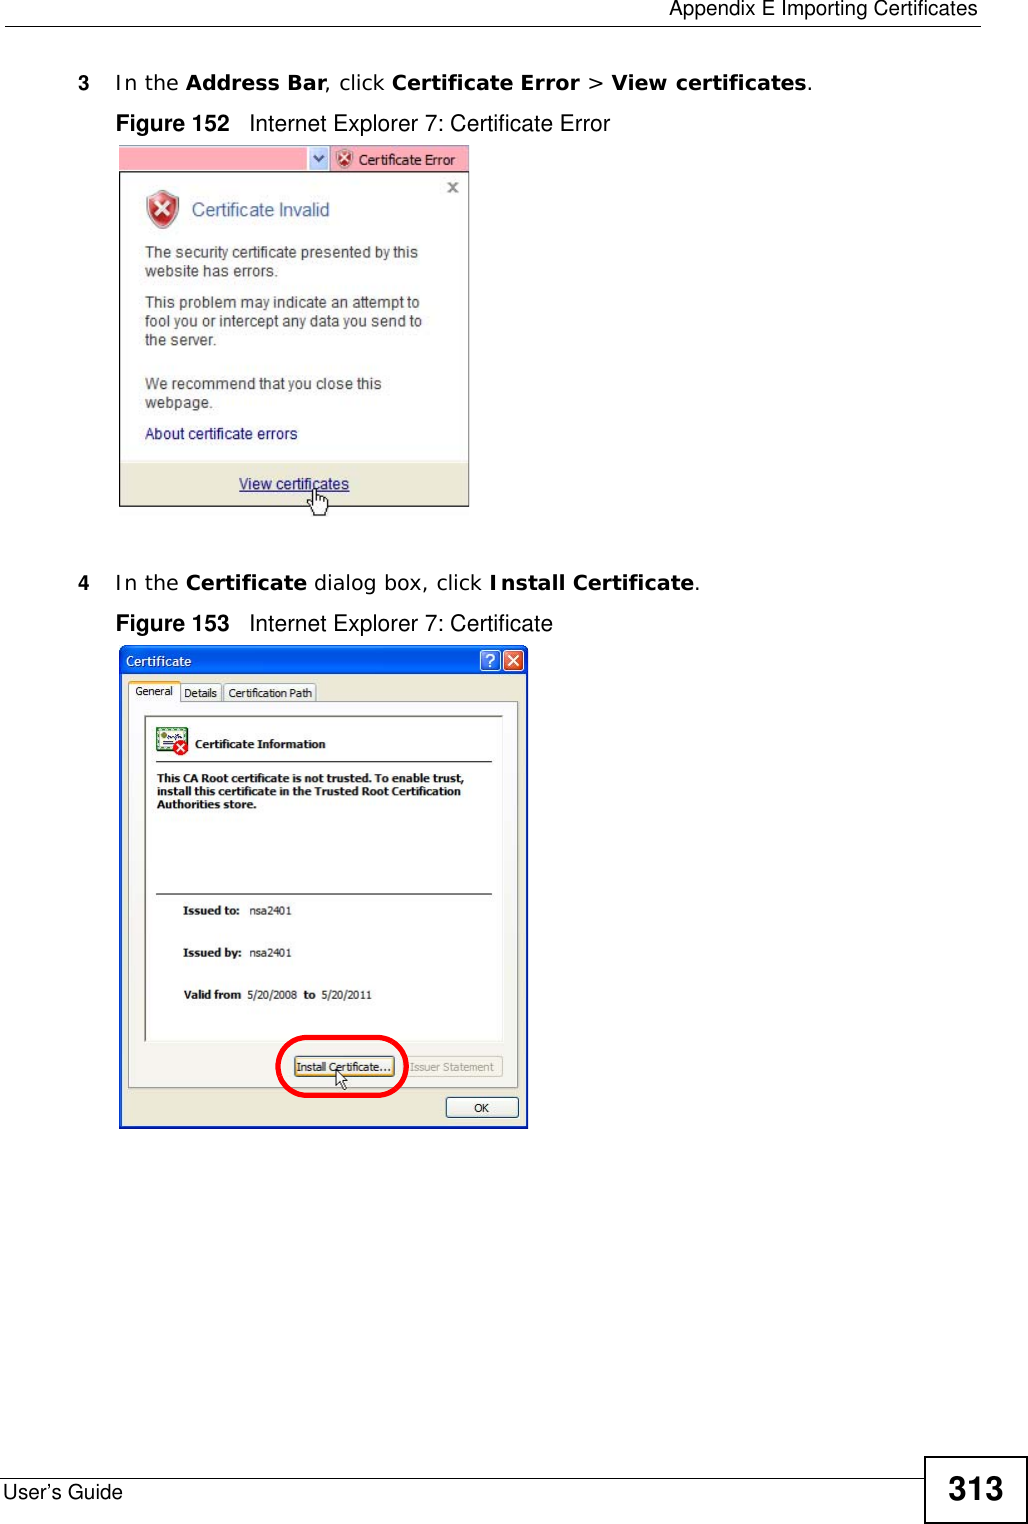  Appendix E Importing CertificatesUser’s Guide 3133In the Address Bar, click Certificate Error &gt; View certificates.Figure 152   Internet Explorer 7: Certificate Error4In the Certificate dialog box, click Install Certificate.Figure 153   Internet Explorer 7: Certificate